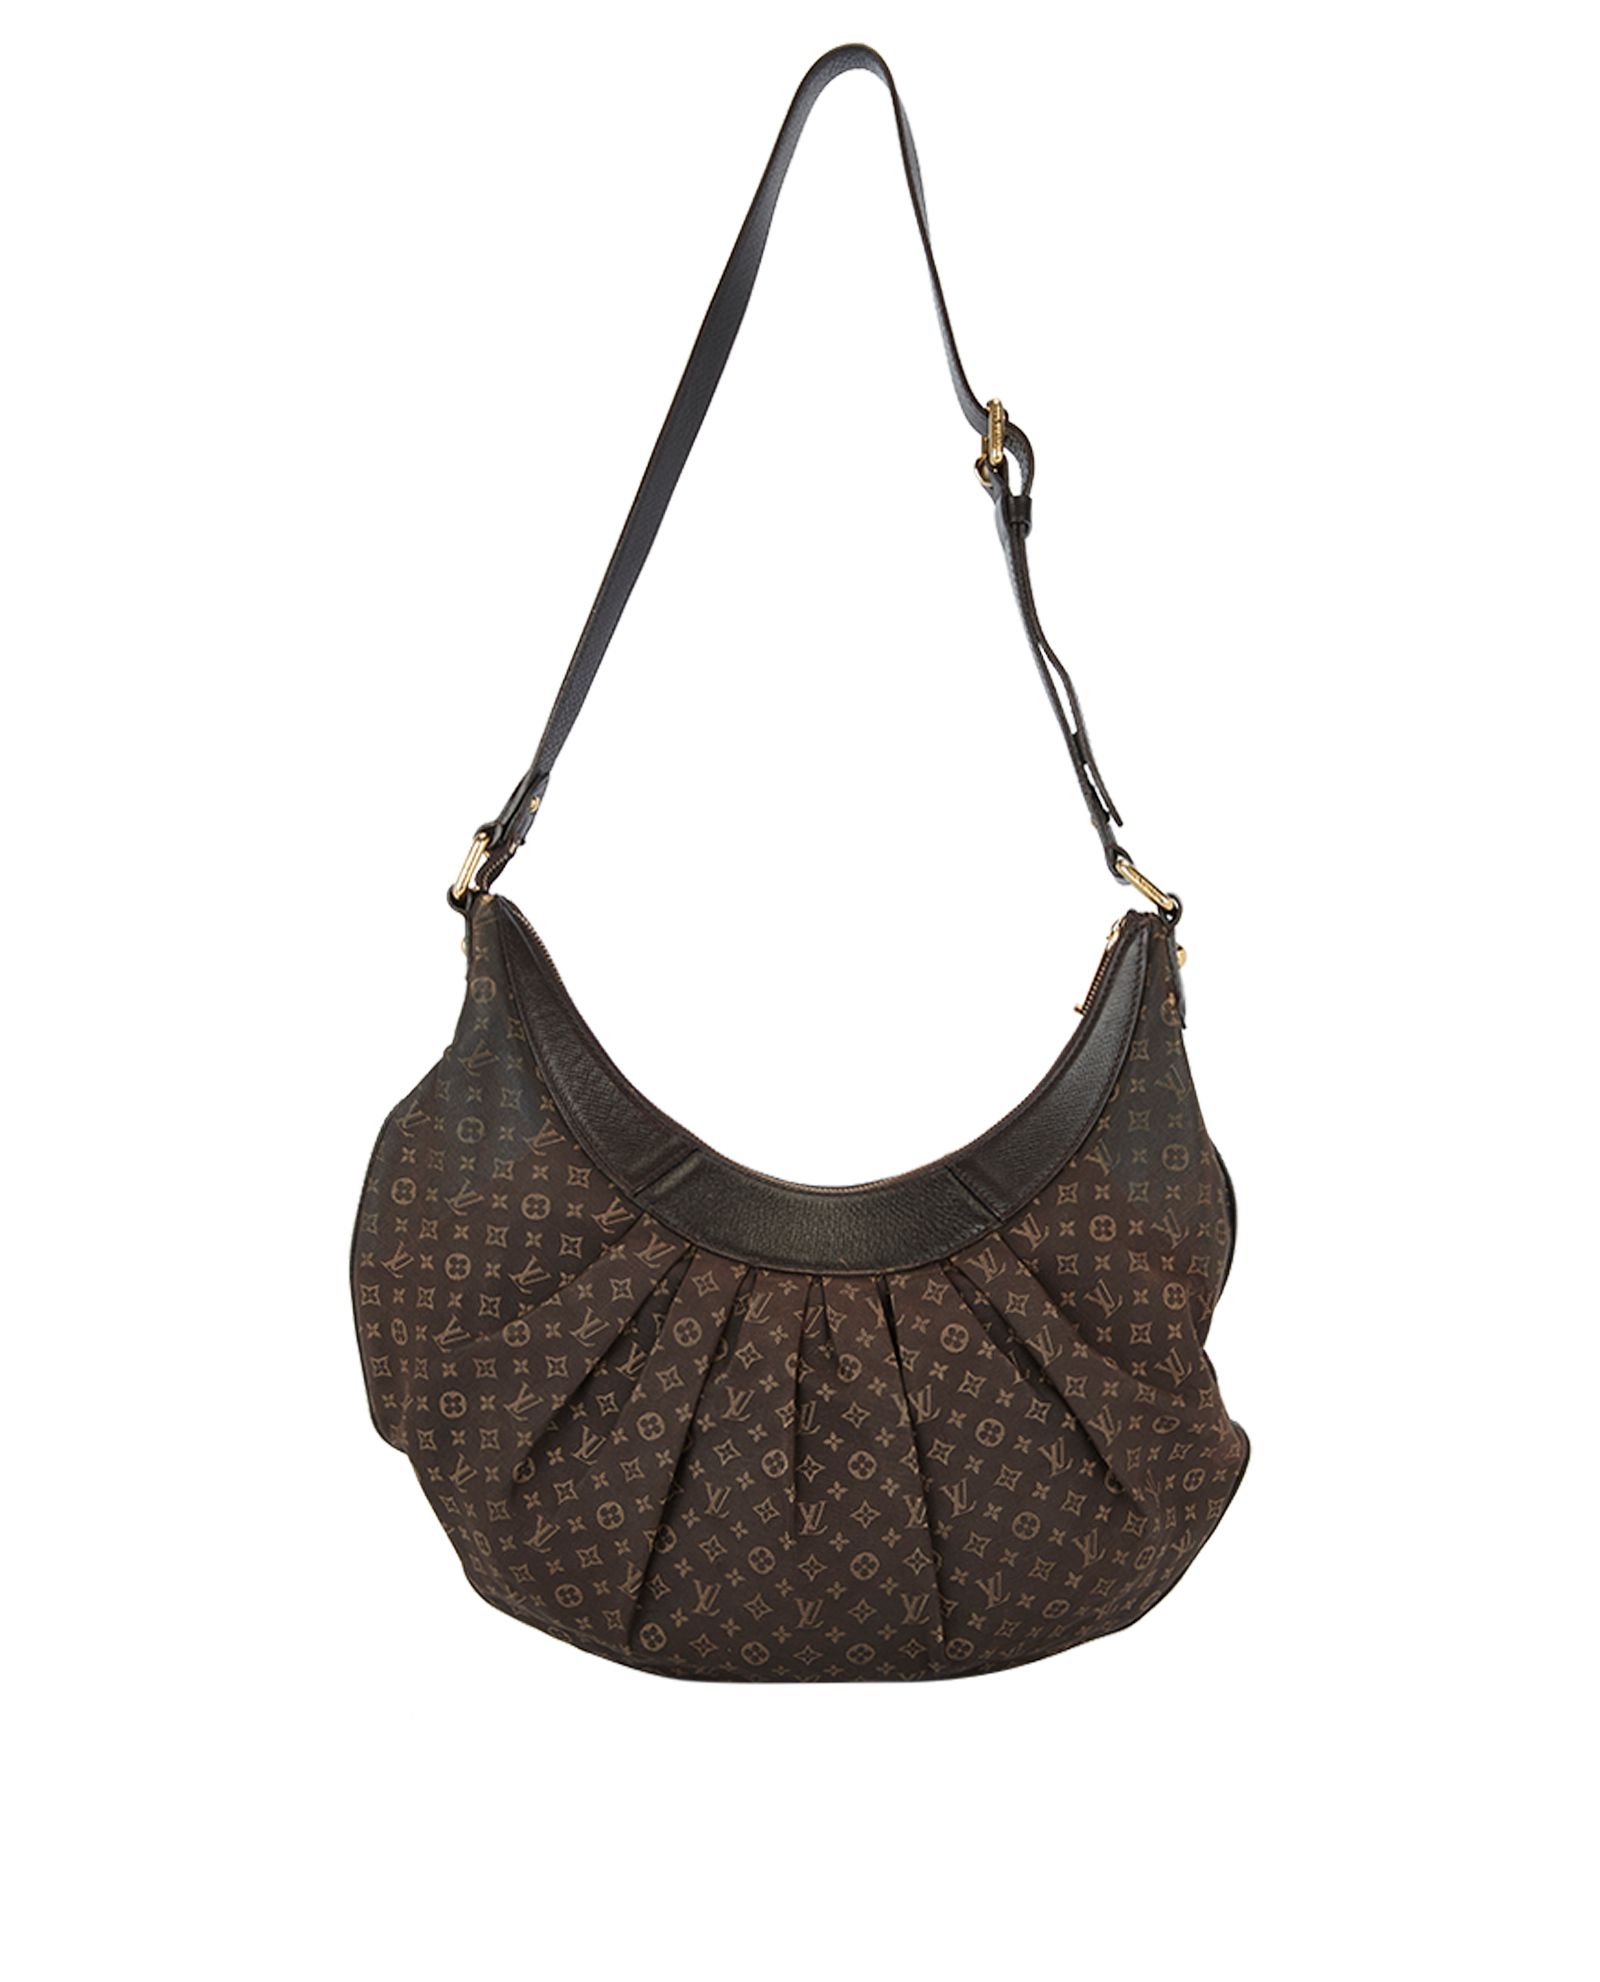 Pre-Owned Louis Vuitton Monogram Idylle Rhapsody PM M40406 Women's Shoulder  Bag Sepia (Good)